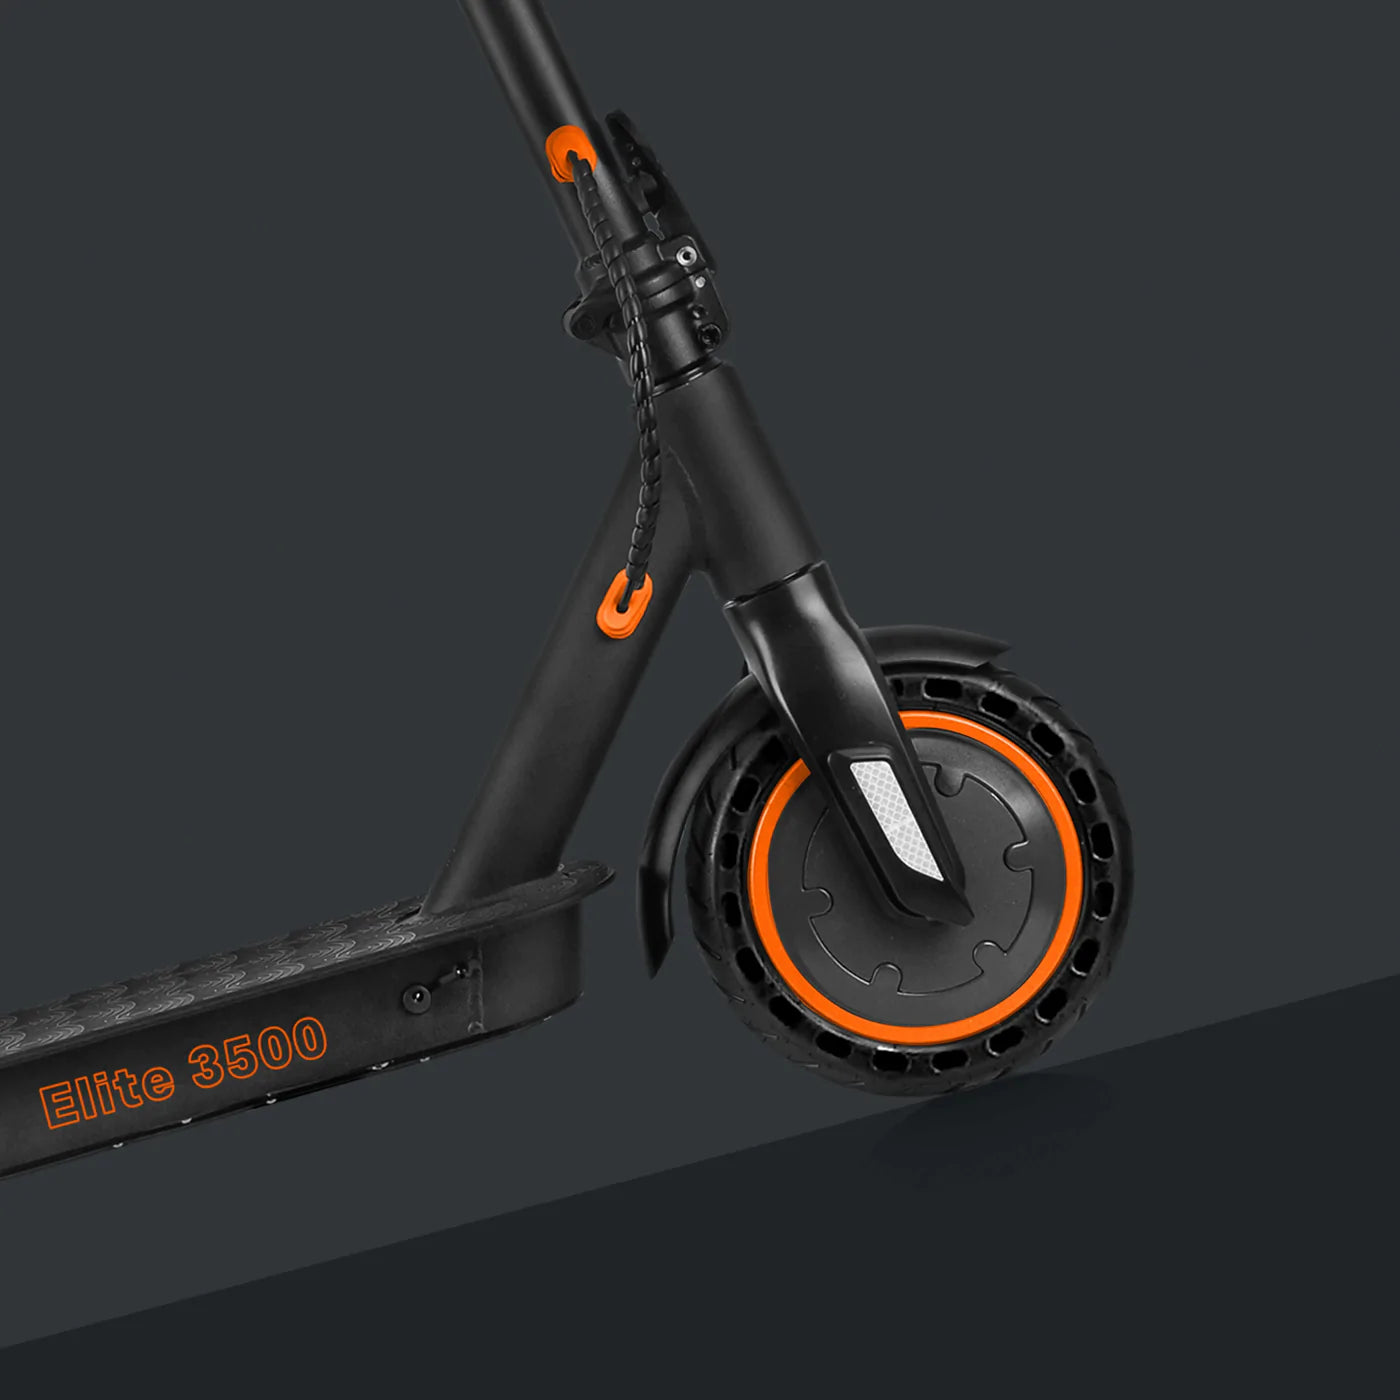 Techtron® Elite 3500 Electric Scooter Neon orange while